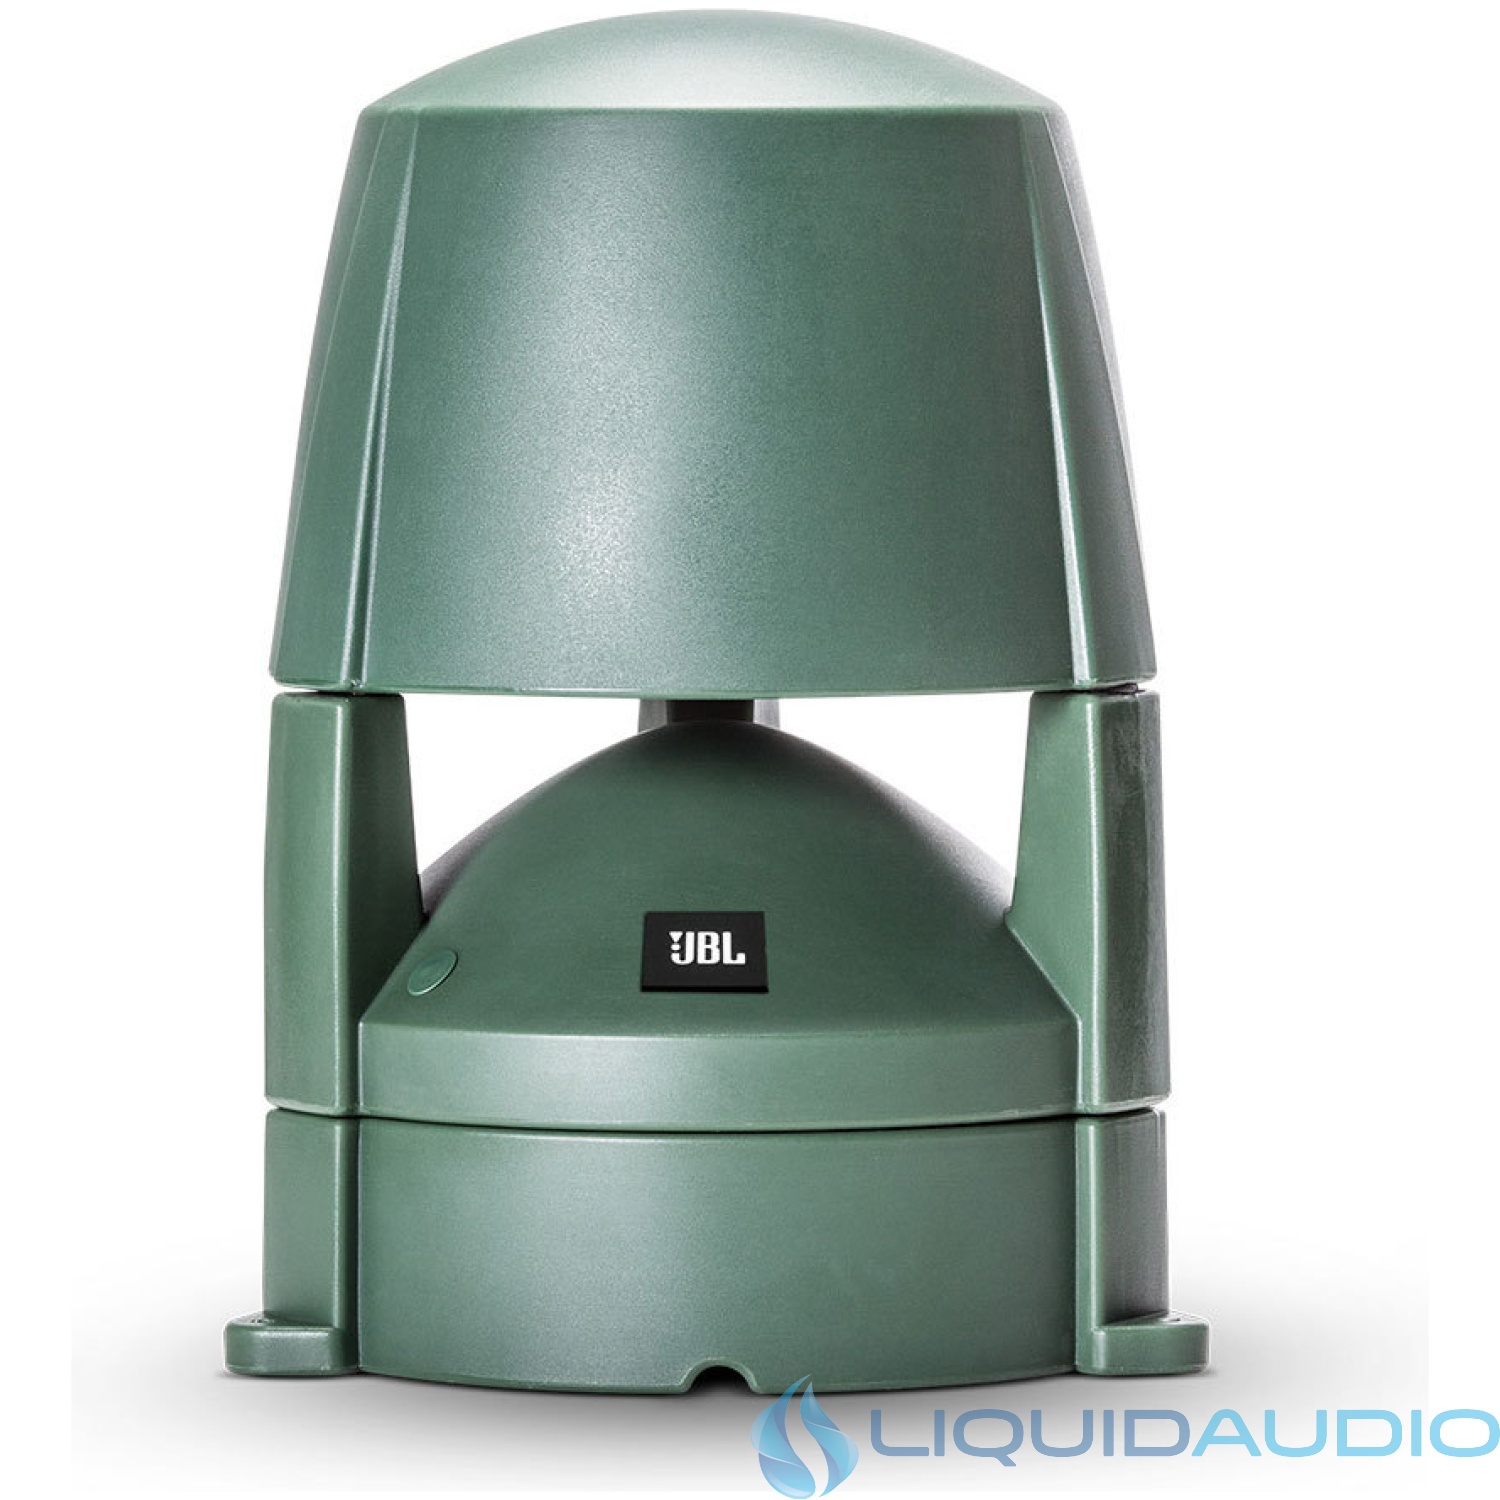 JBL Control 85M Compact 2-Way 5-1/4" Mushroom-Style Landscape Speaker 70V / 100V / 8 Ohm